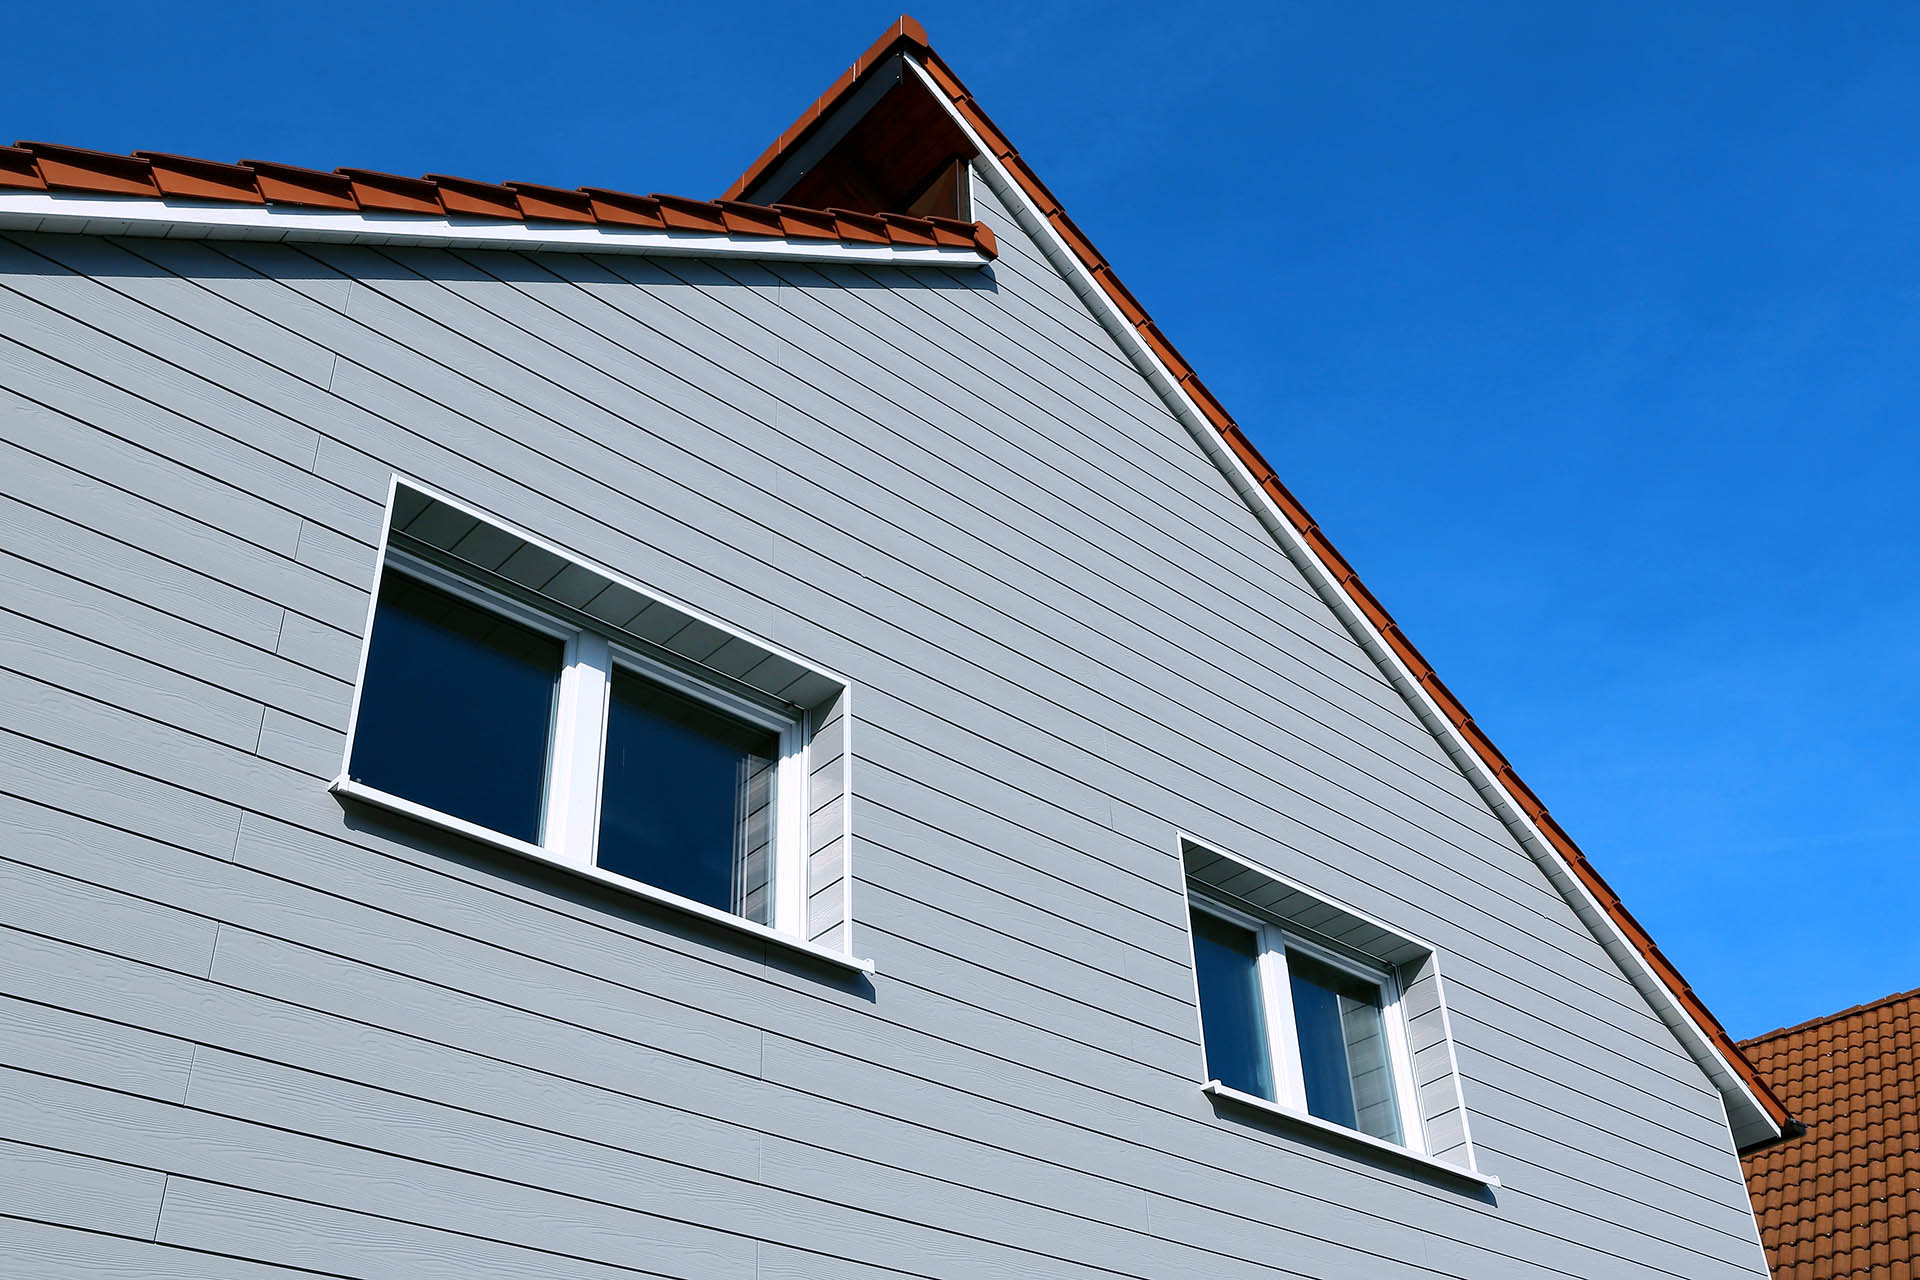 Residential home with composite cladding facade insulation - composites alternatives